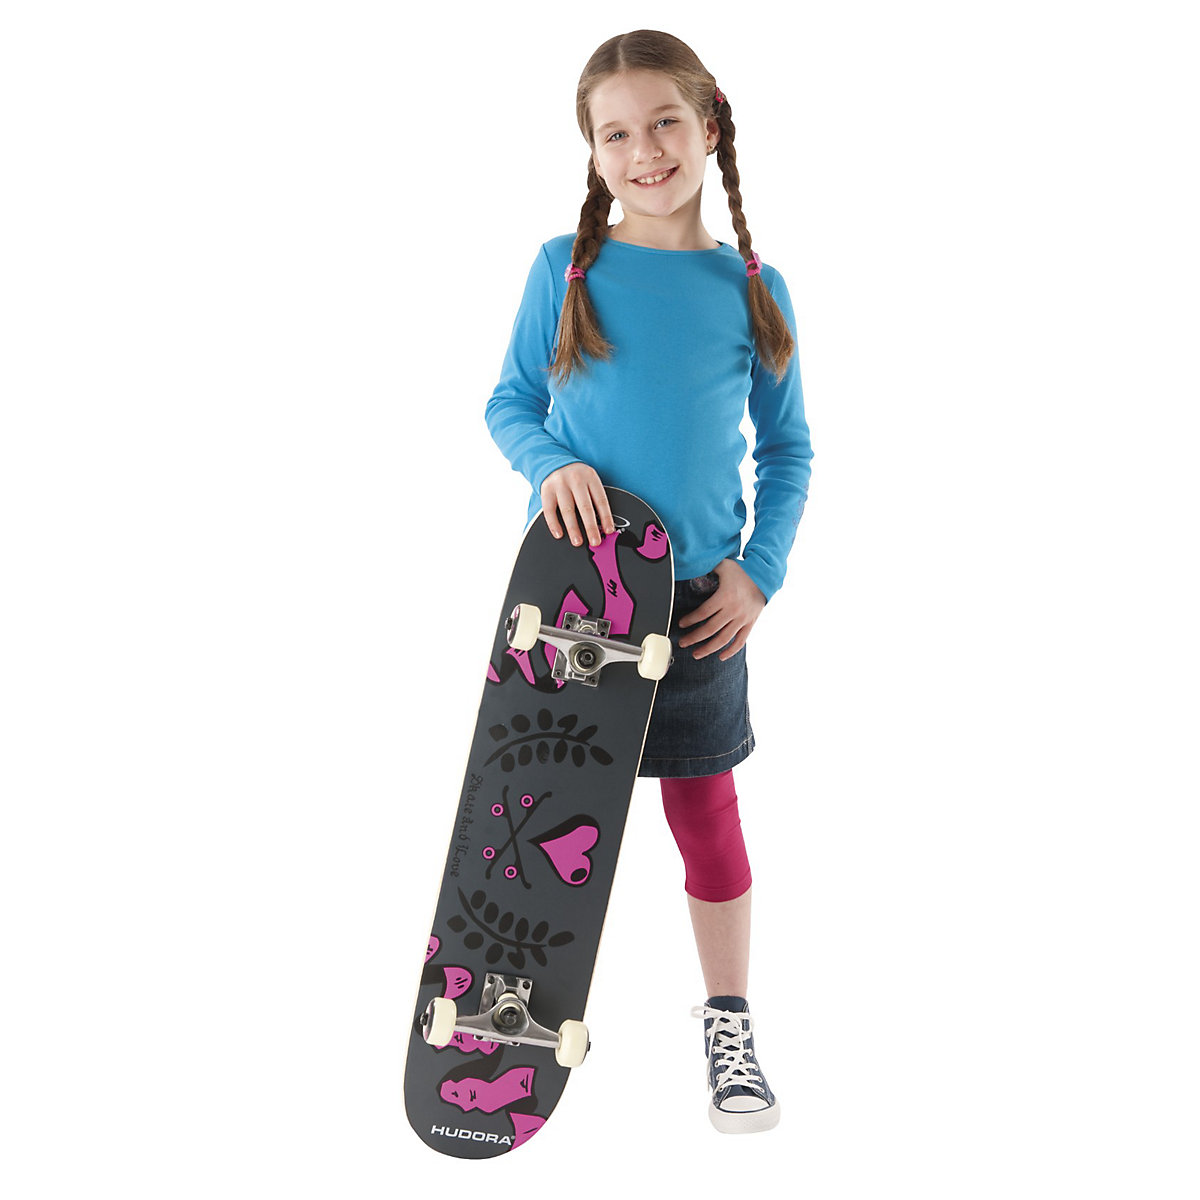 HUDORA Skateboard Love ABEC 5 RI5702